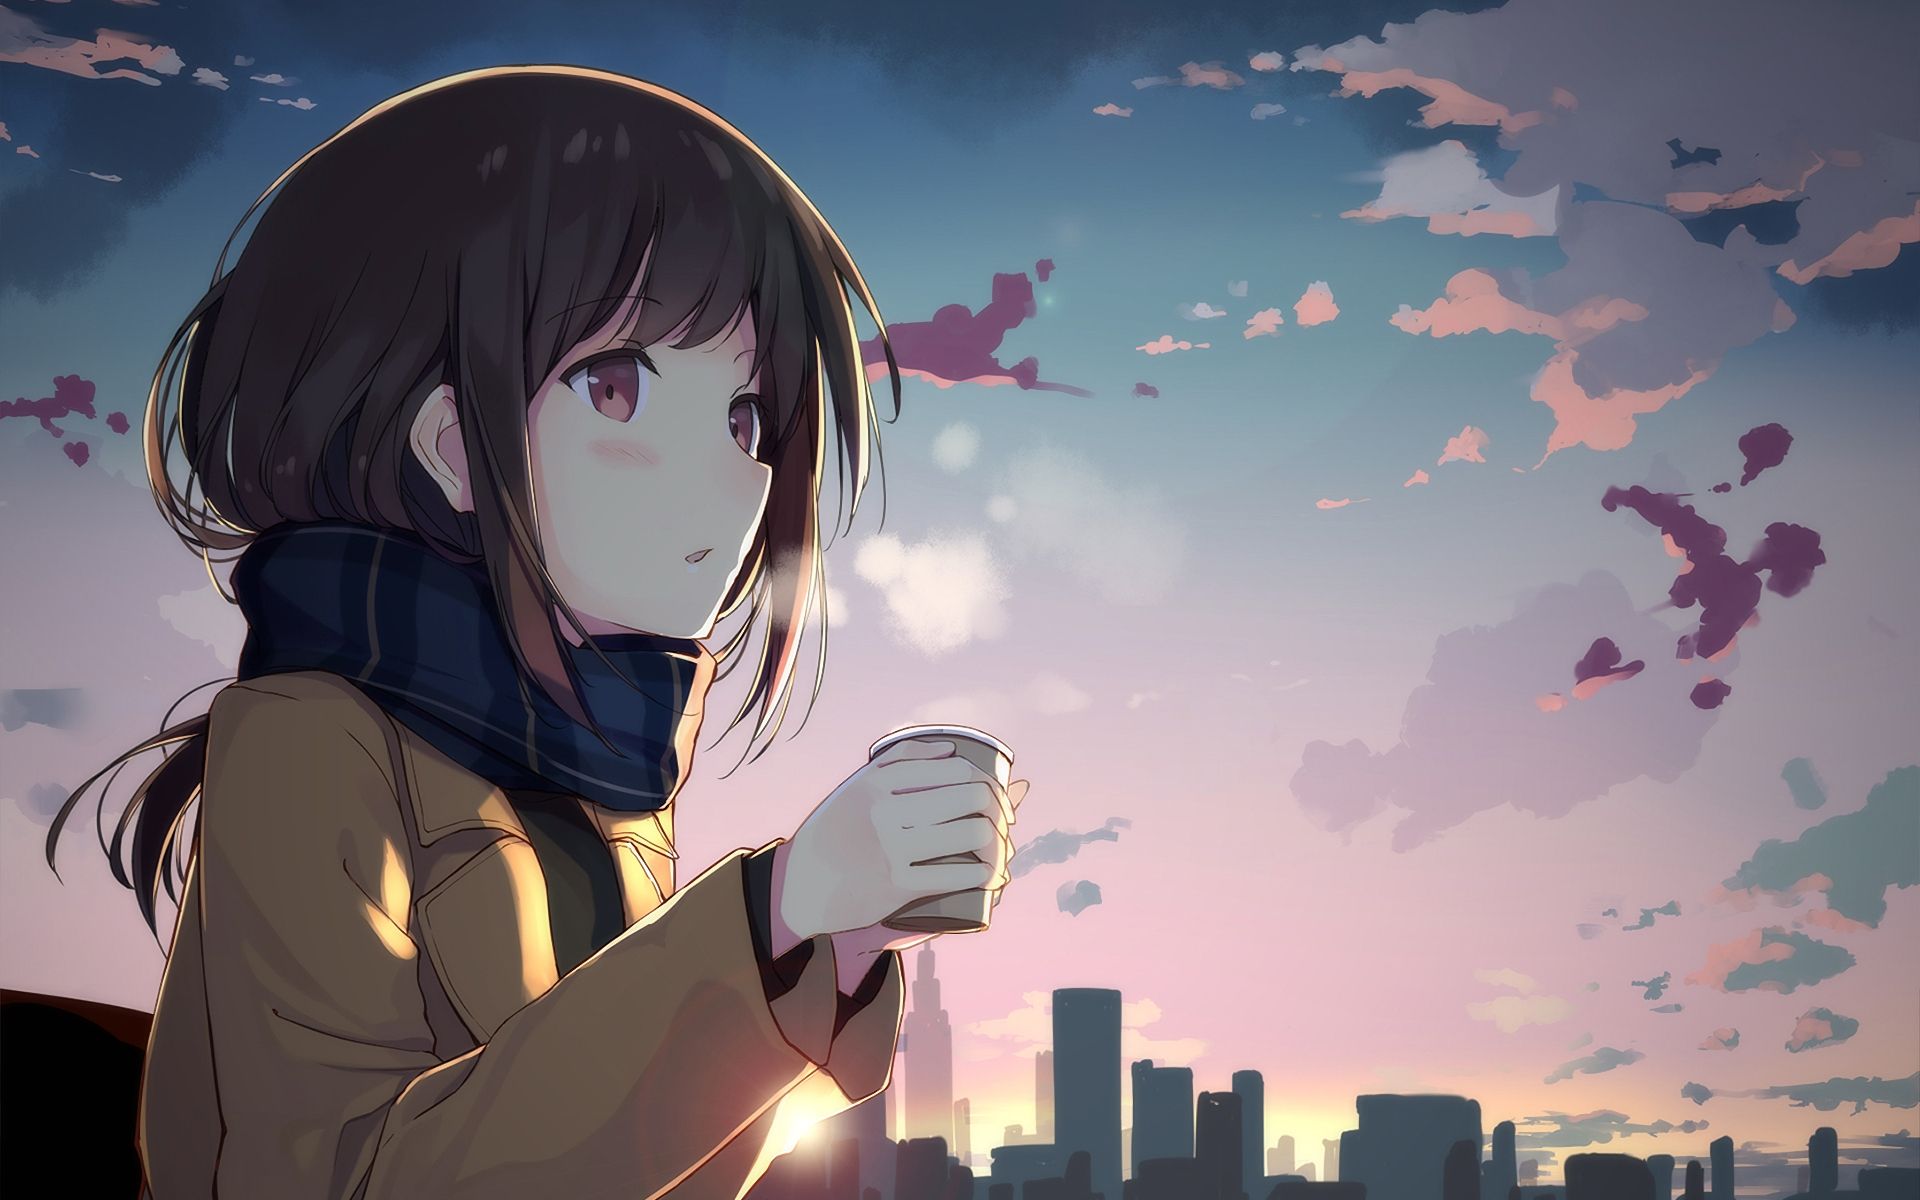 Desktop Wallpaper Cute Anime Girl Drinking Coffee, Anime, HD Image, Picture, Background, S4bgim